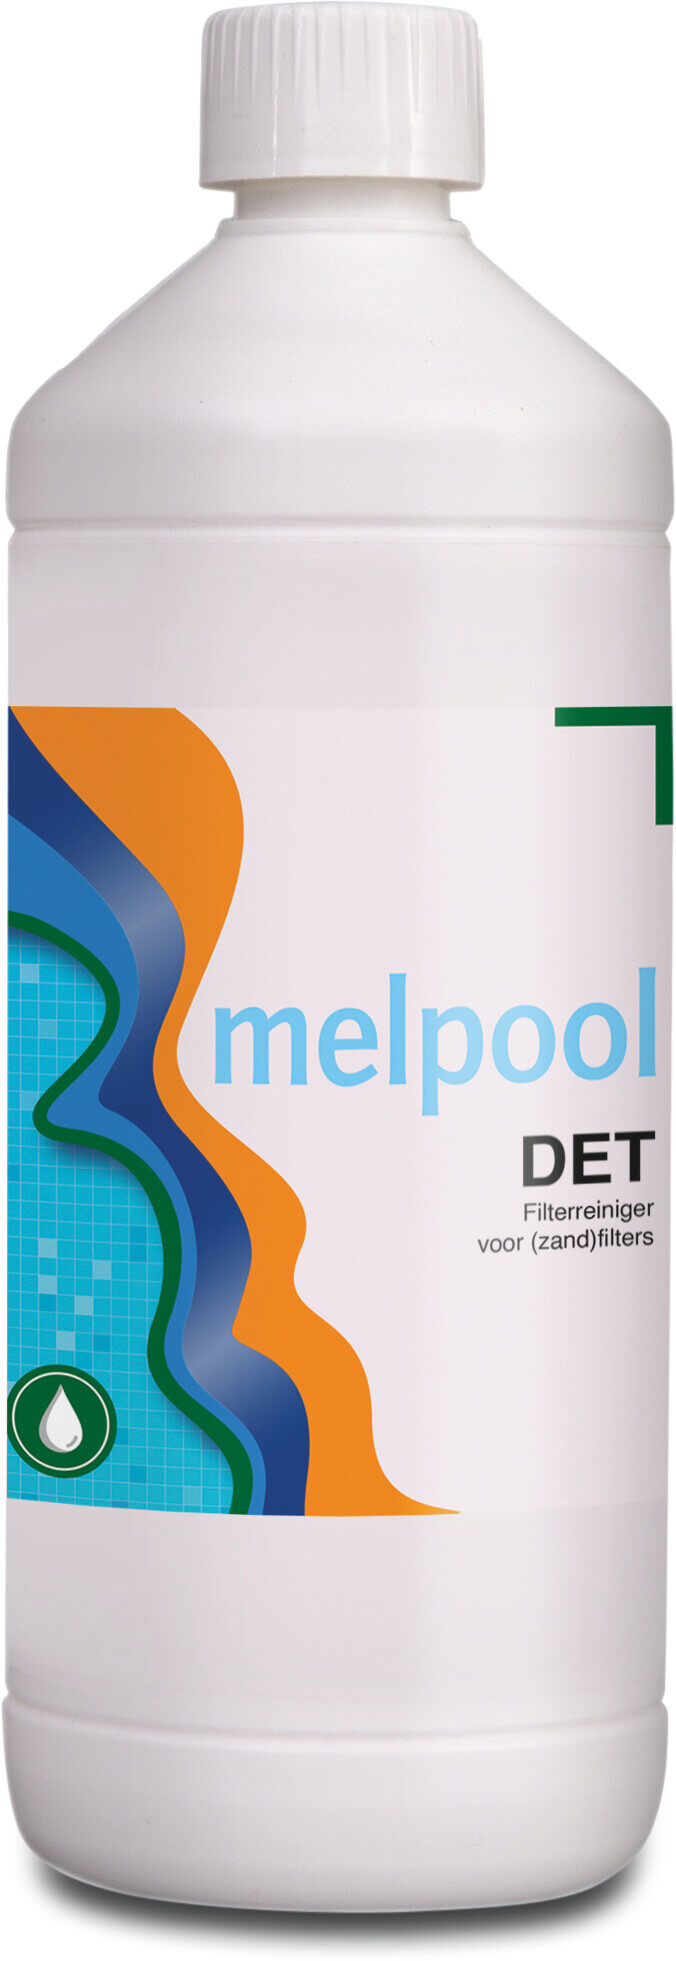 Melpool DET Phosphoric acid solution 1ltr